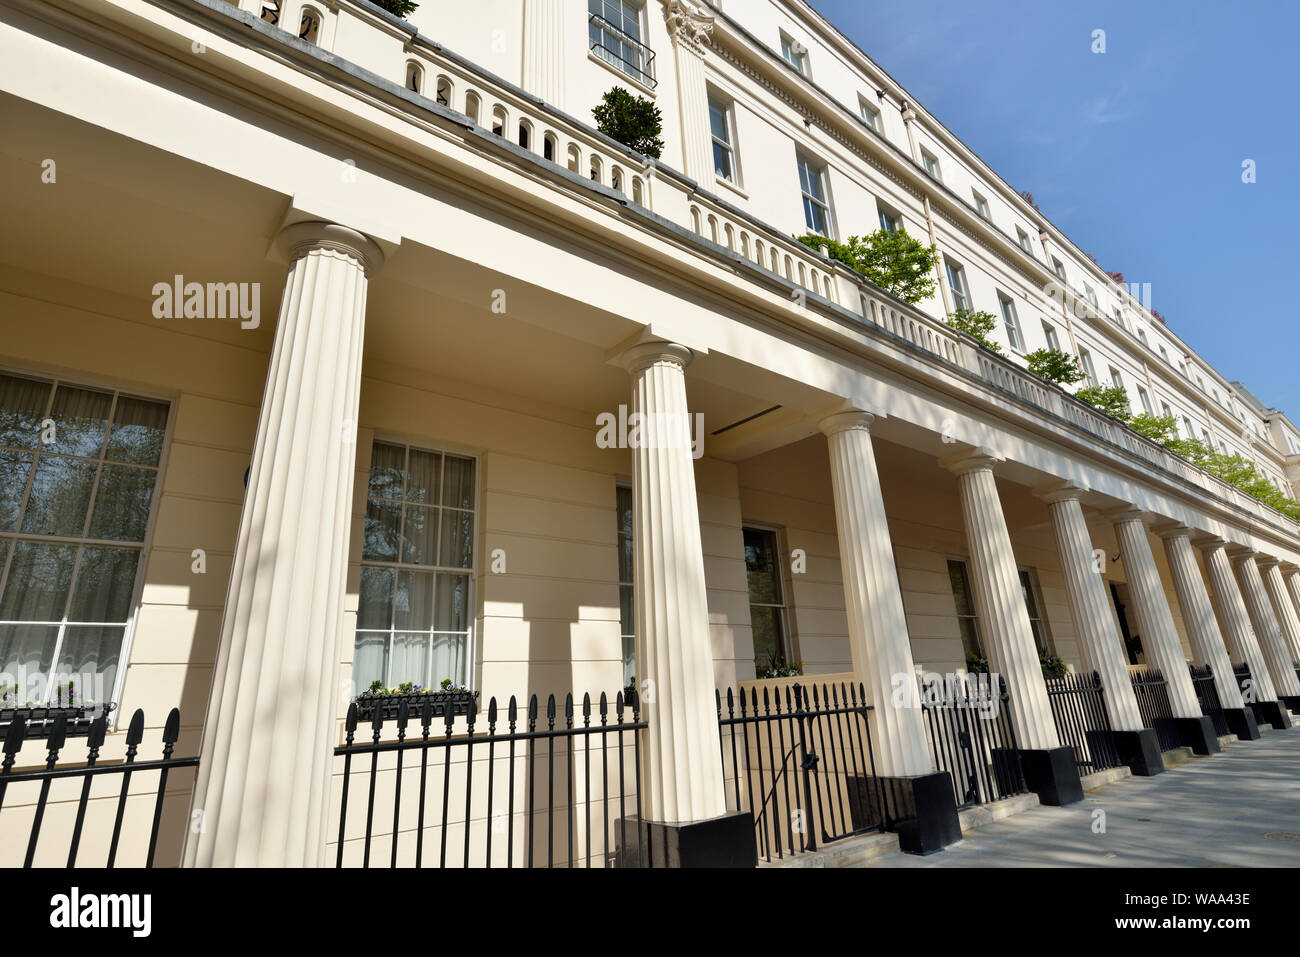 Terraced Luxury residences with stucco facade, Eaton Square, garden square, Belgravia, West London, United Kingdom Stock Photo